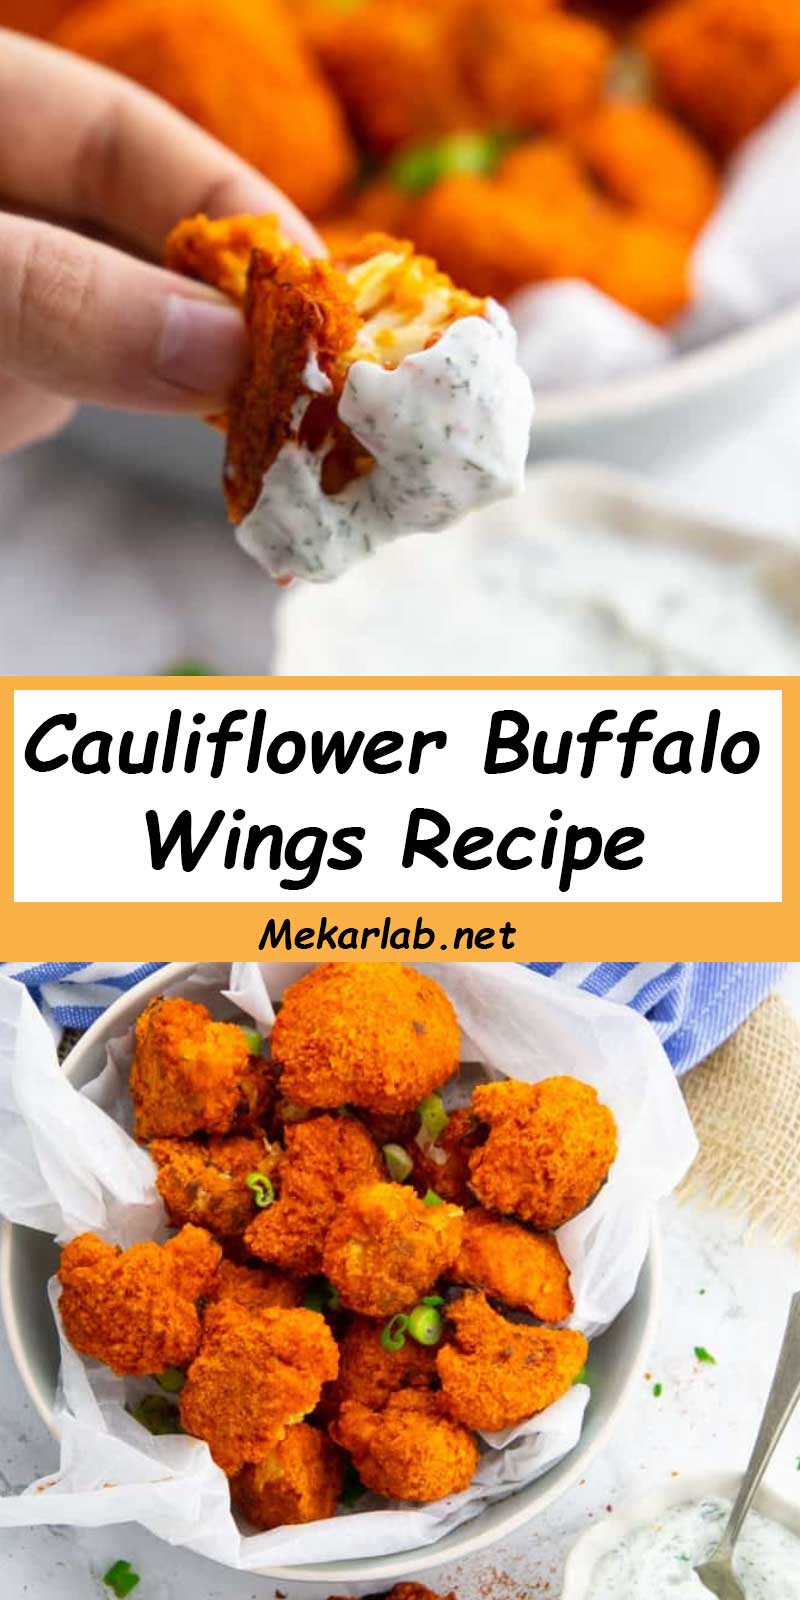 Cauliflower Buffalo Wings Recipe